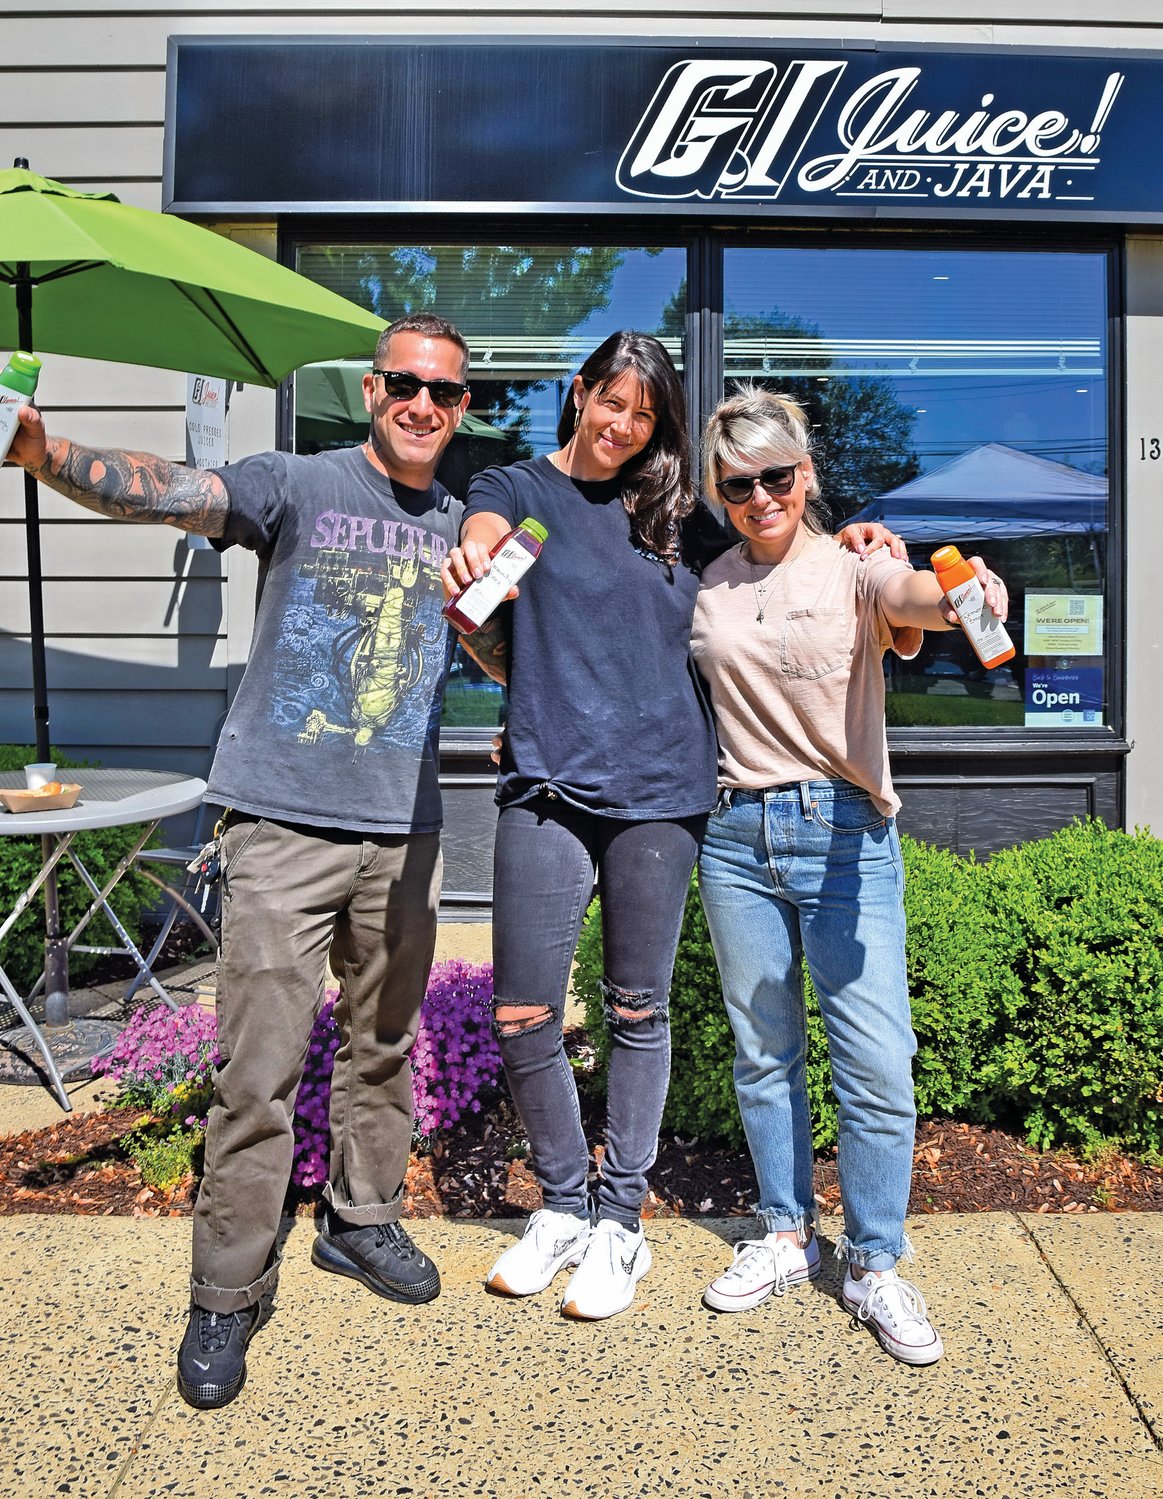 Ryan Prezioso, Mary Deas and Tiffany Pedone, owners of GI Juice & Java in Buckingham Green